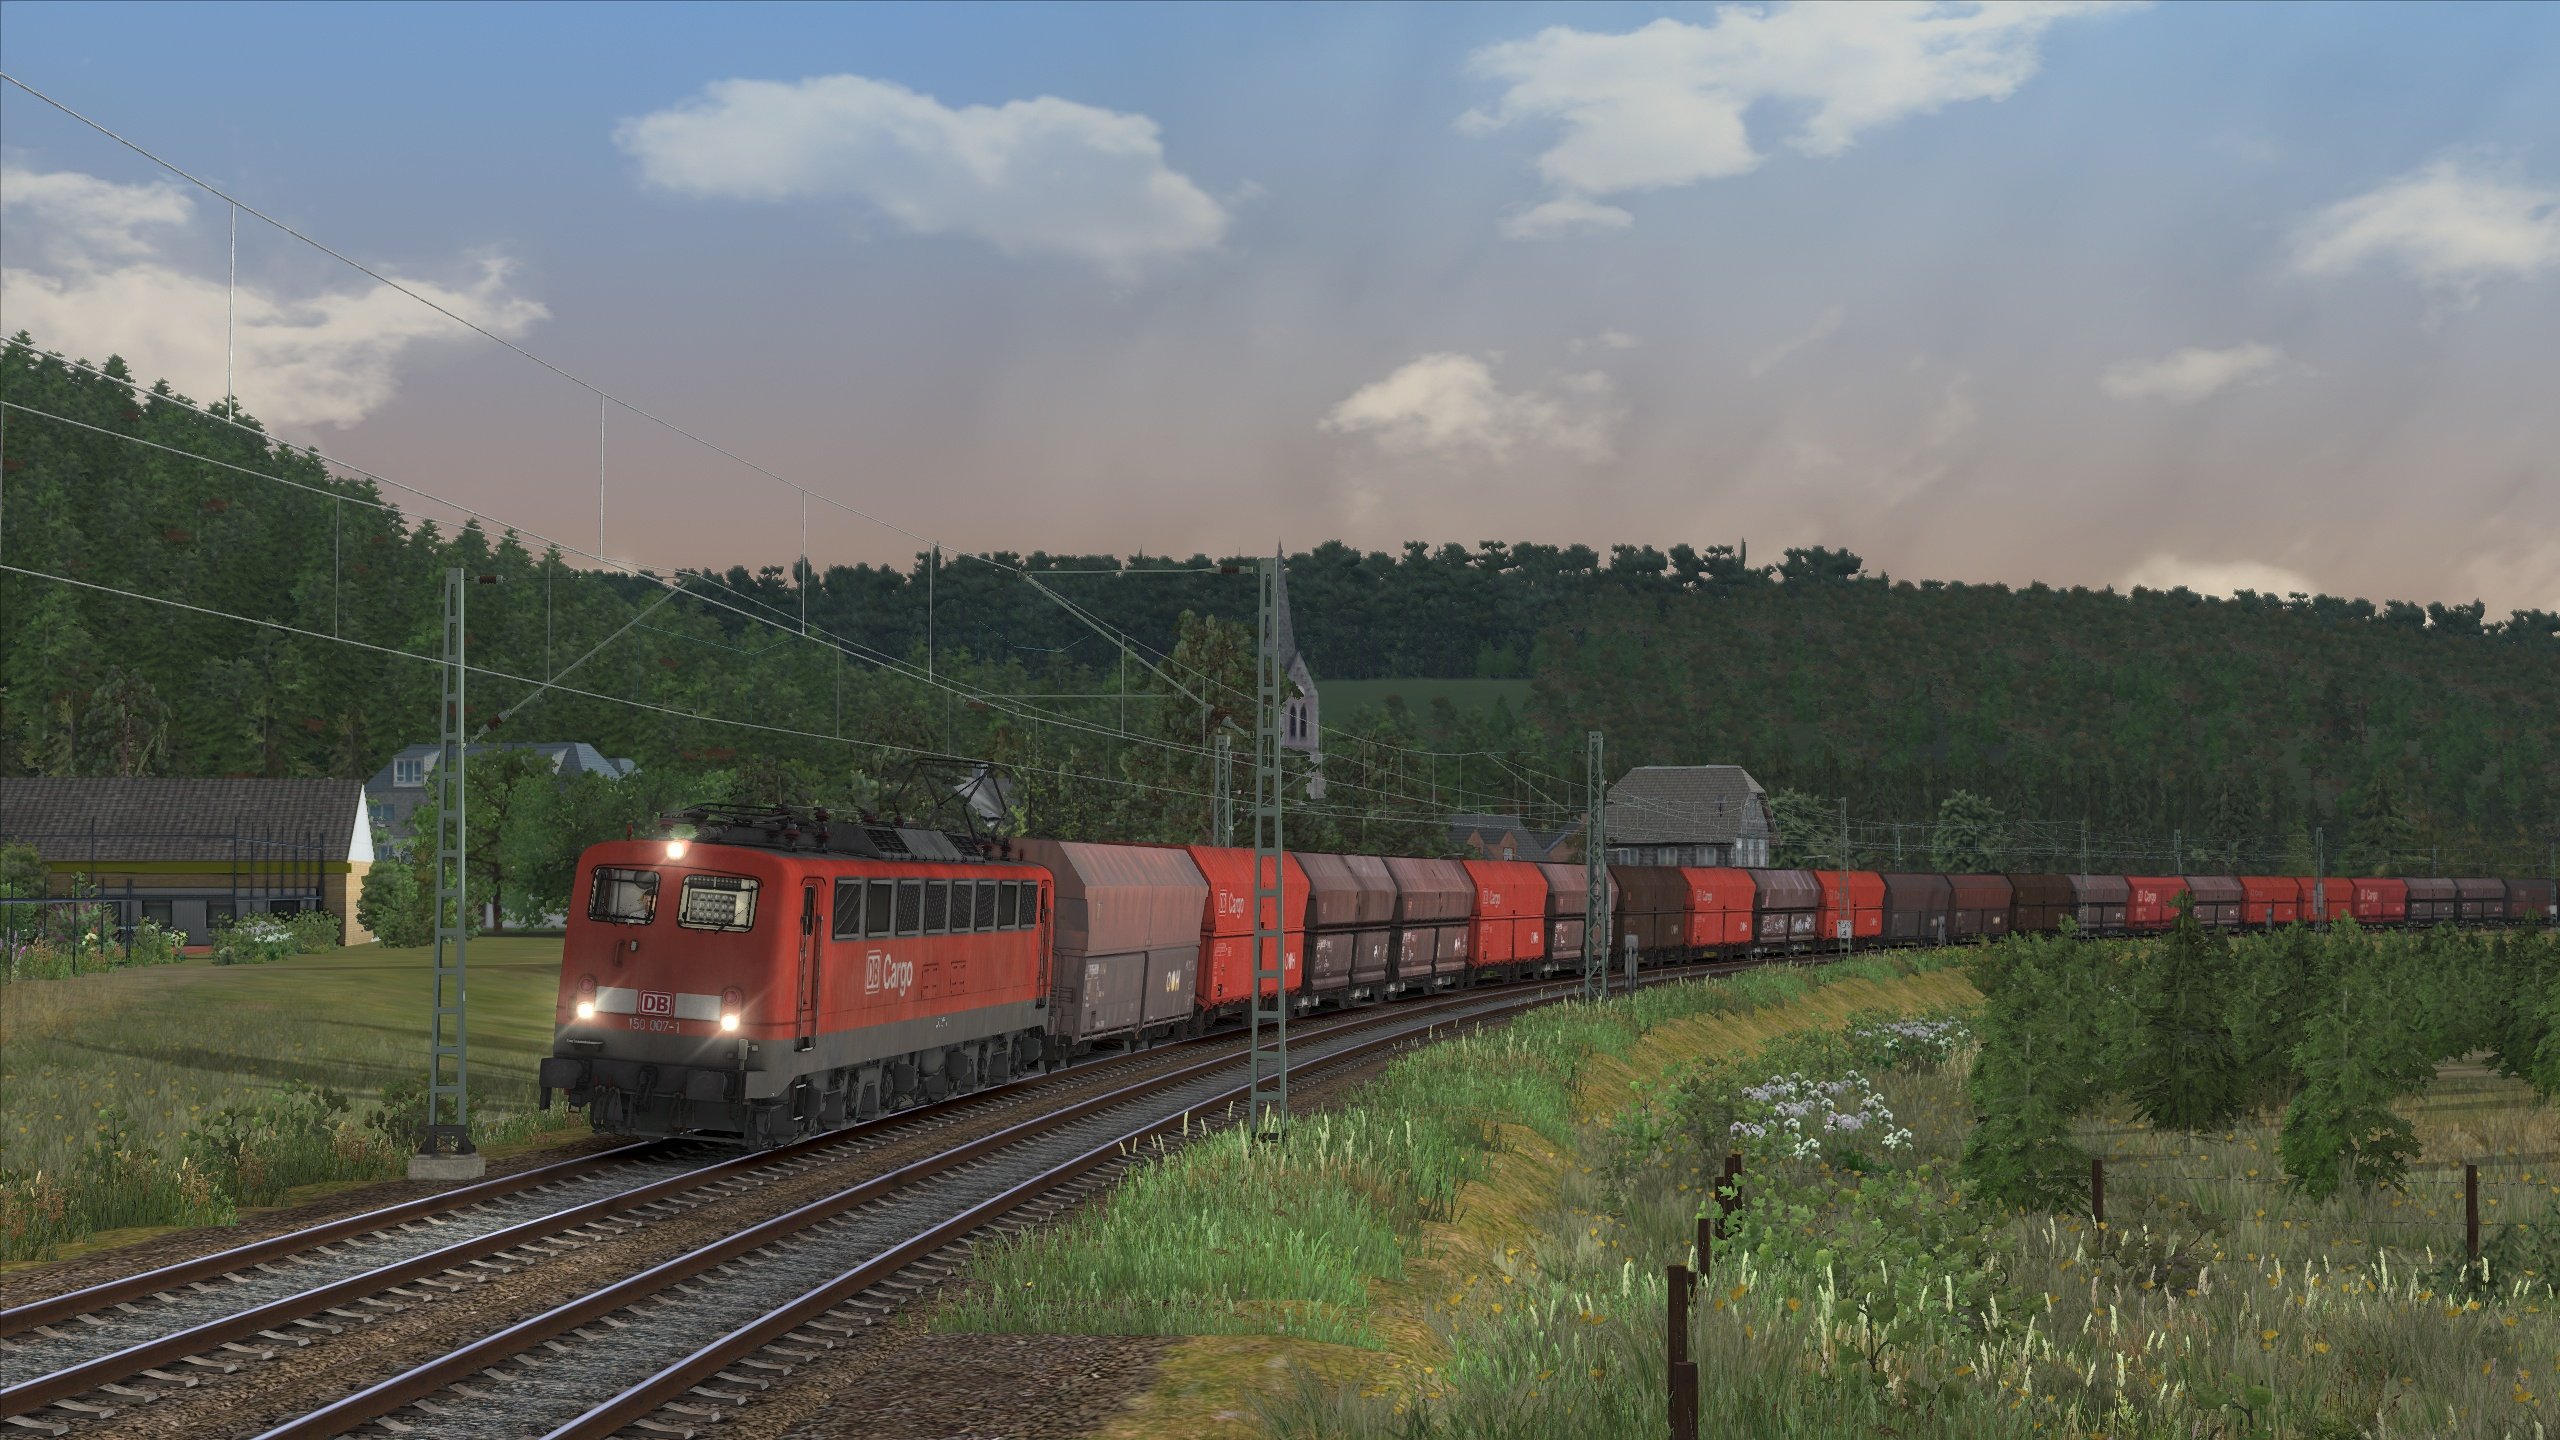 150 007 with a limestone train